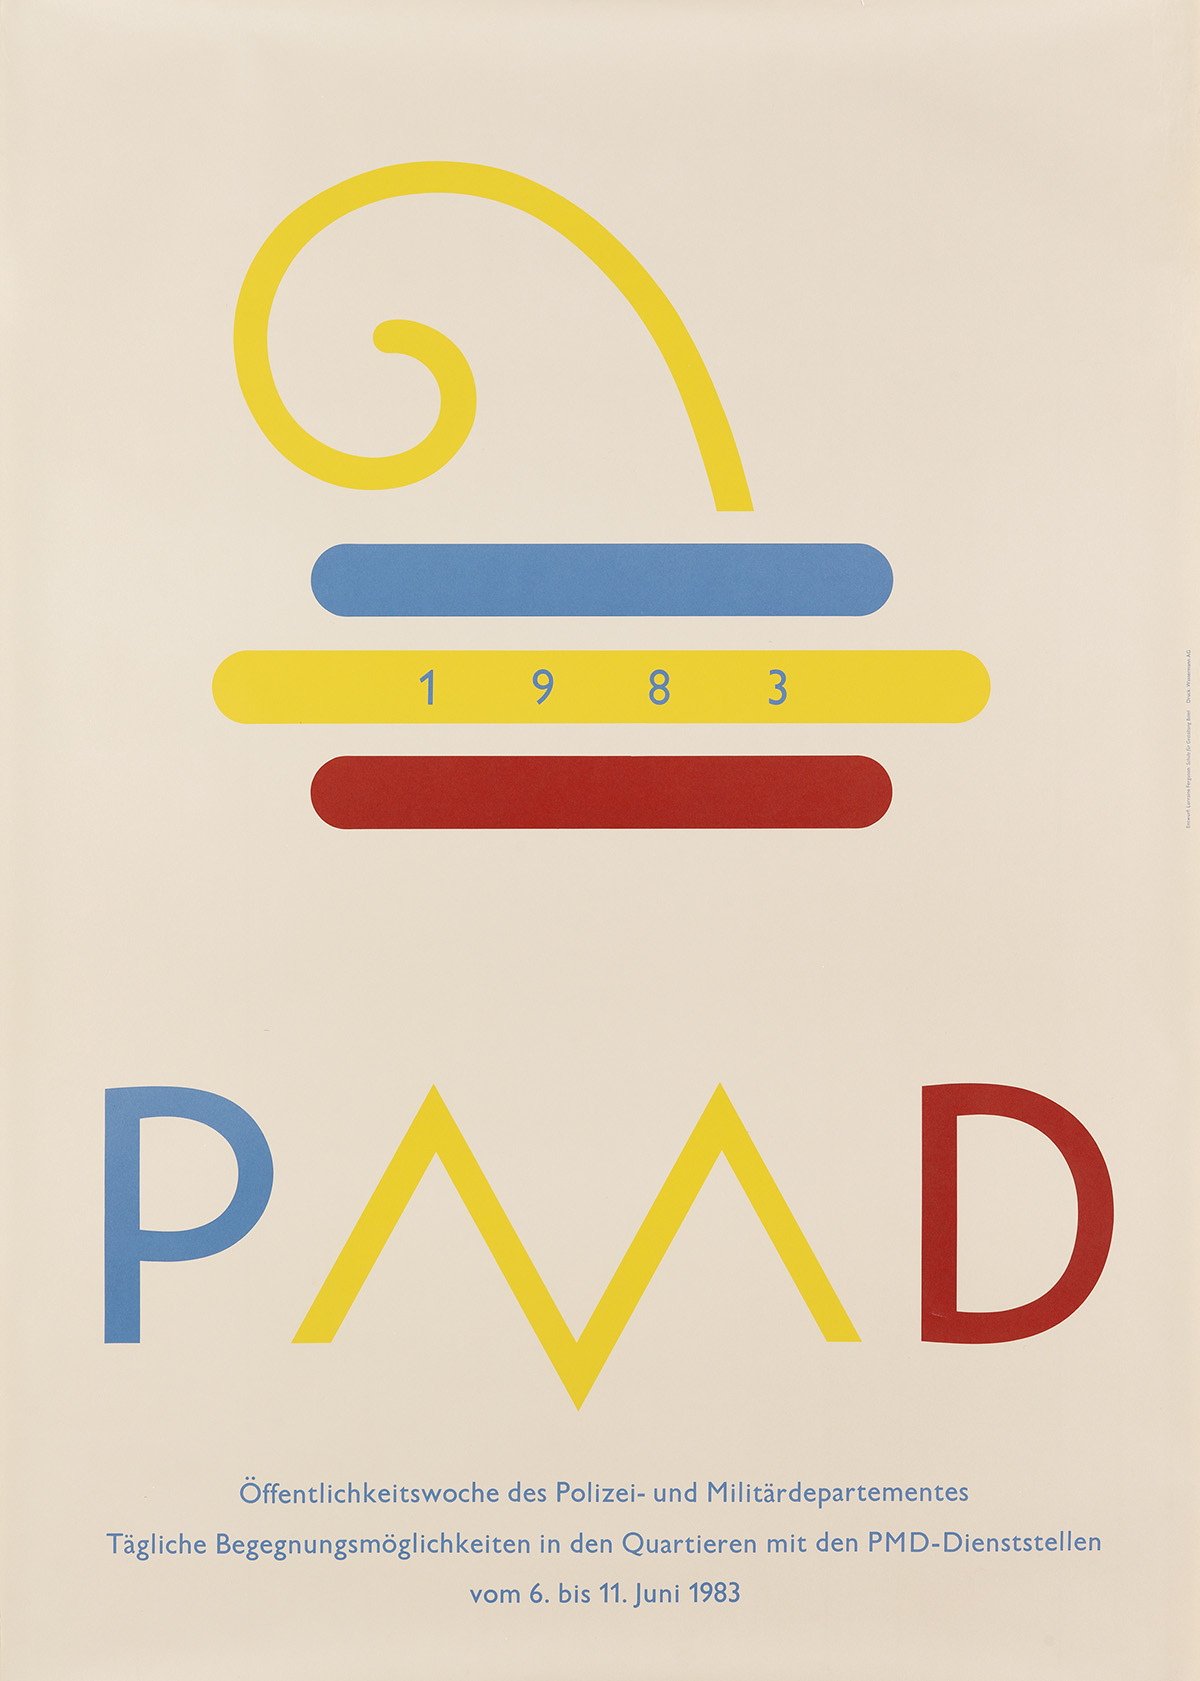 1980s graphic design poster